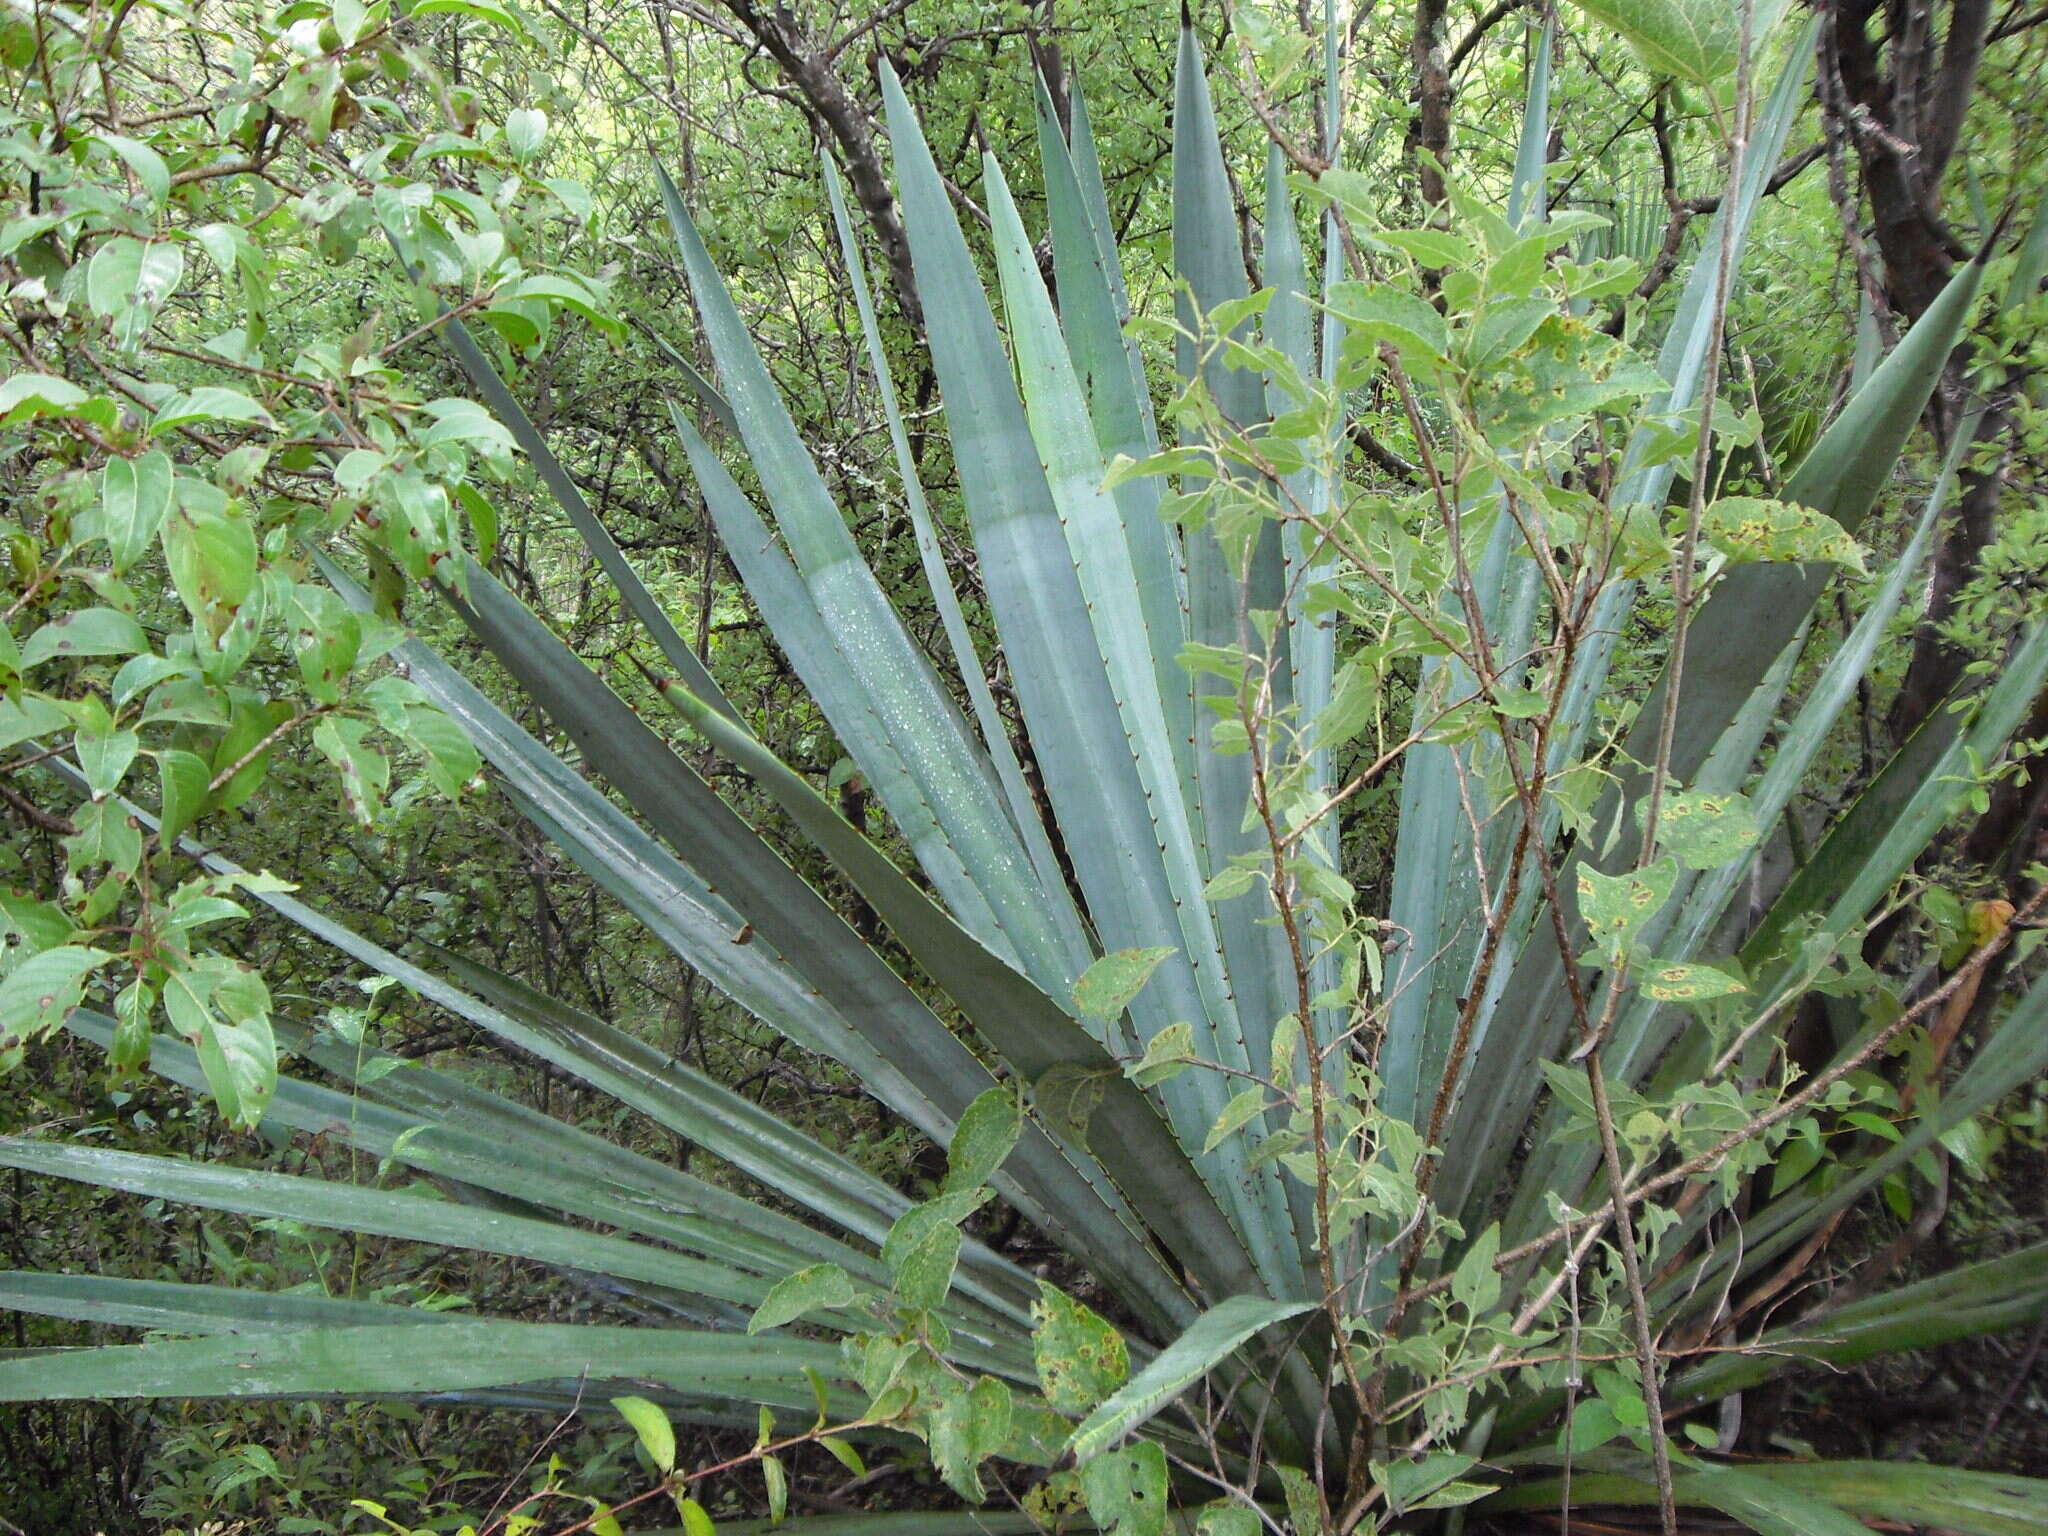 Image of century plant